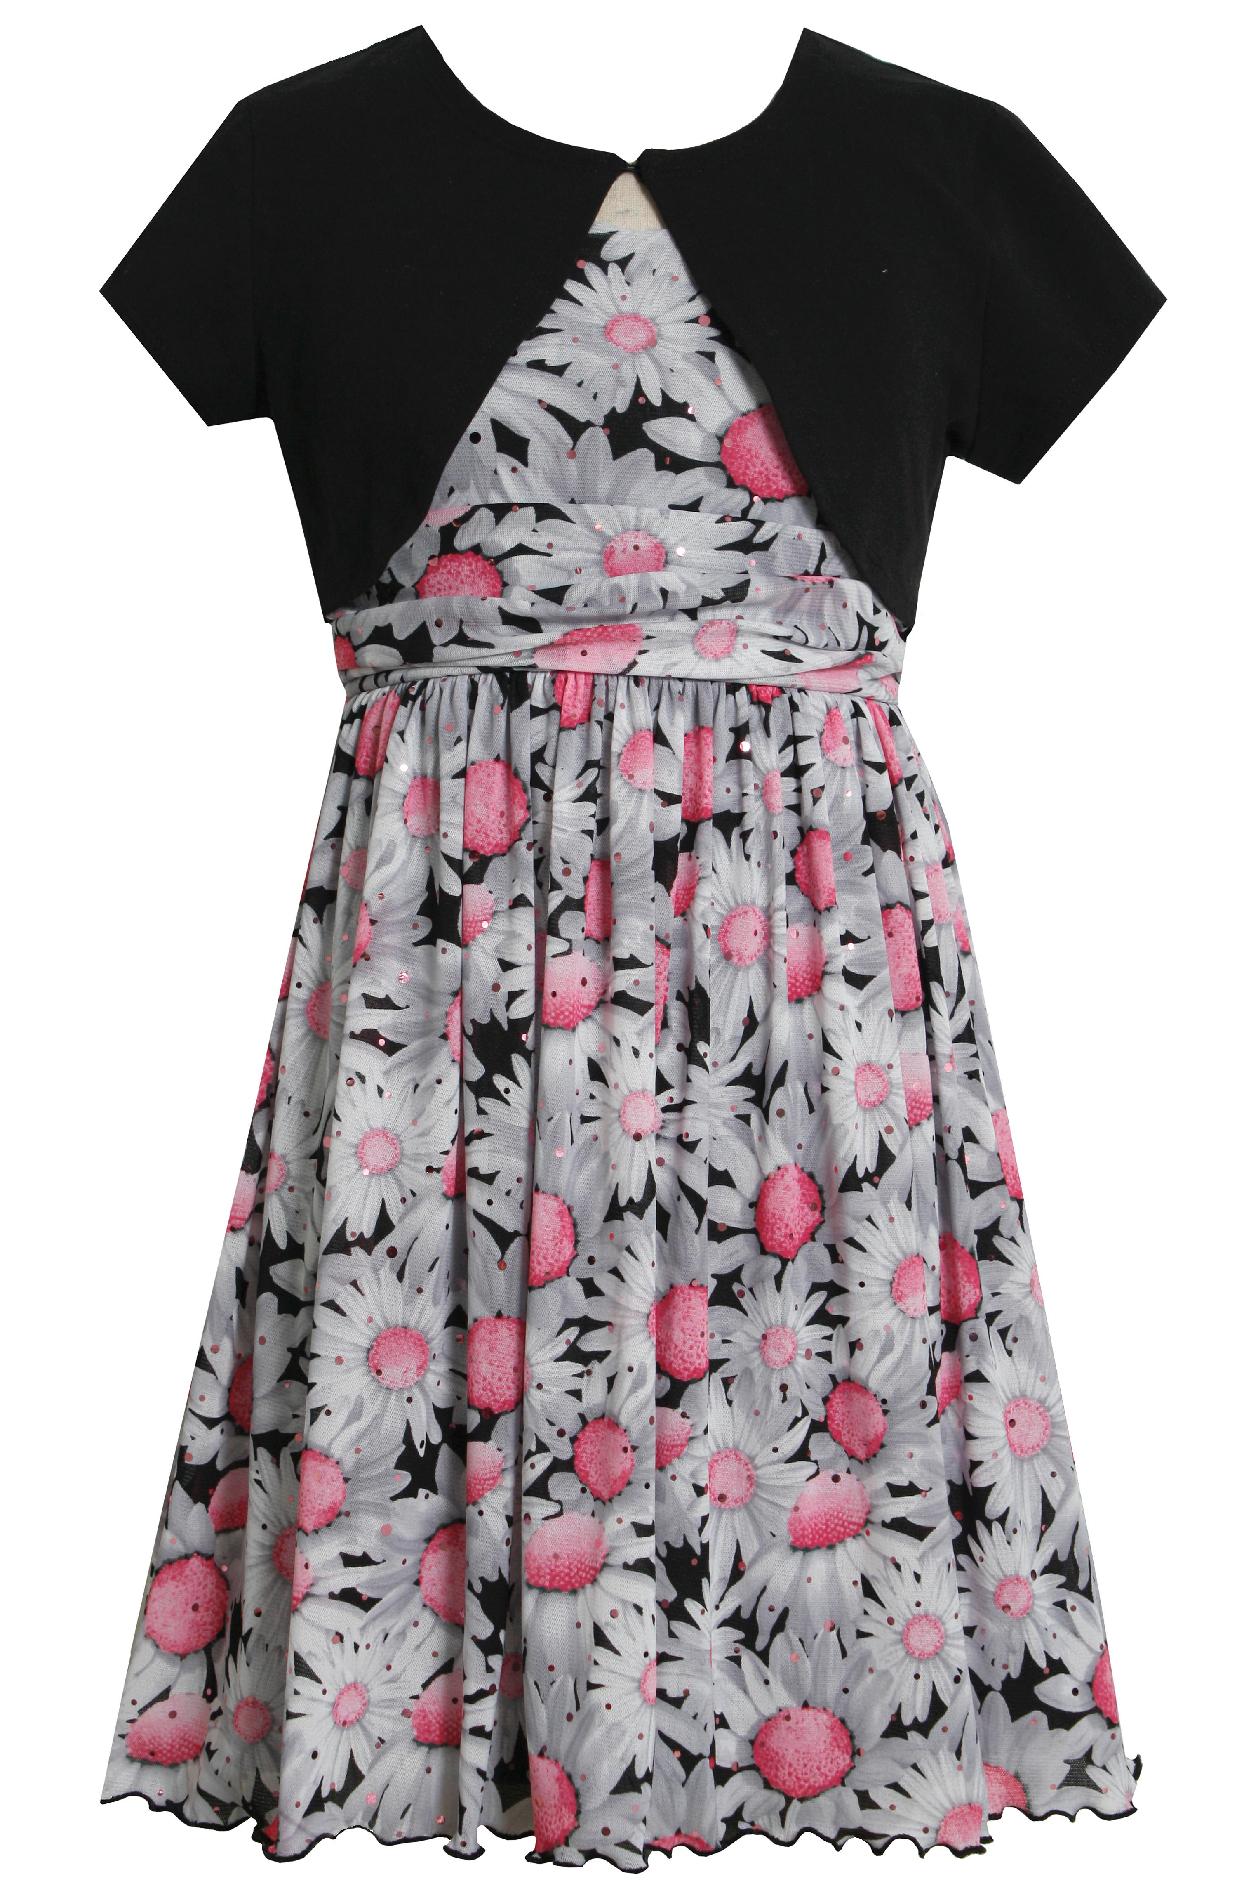 Ashley Ann Girl's Dress & Shrug - Spangled Floral